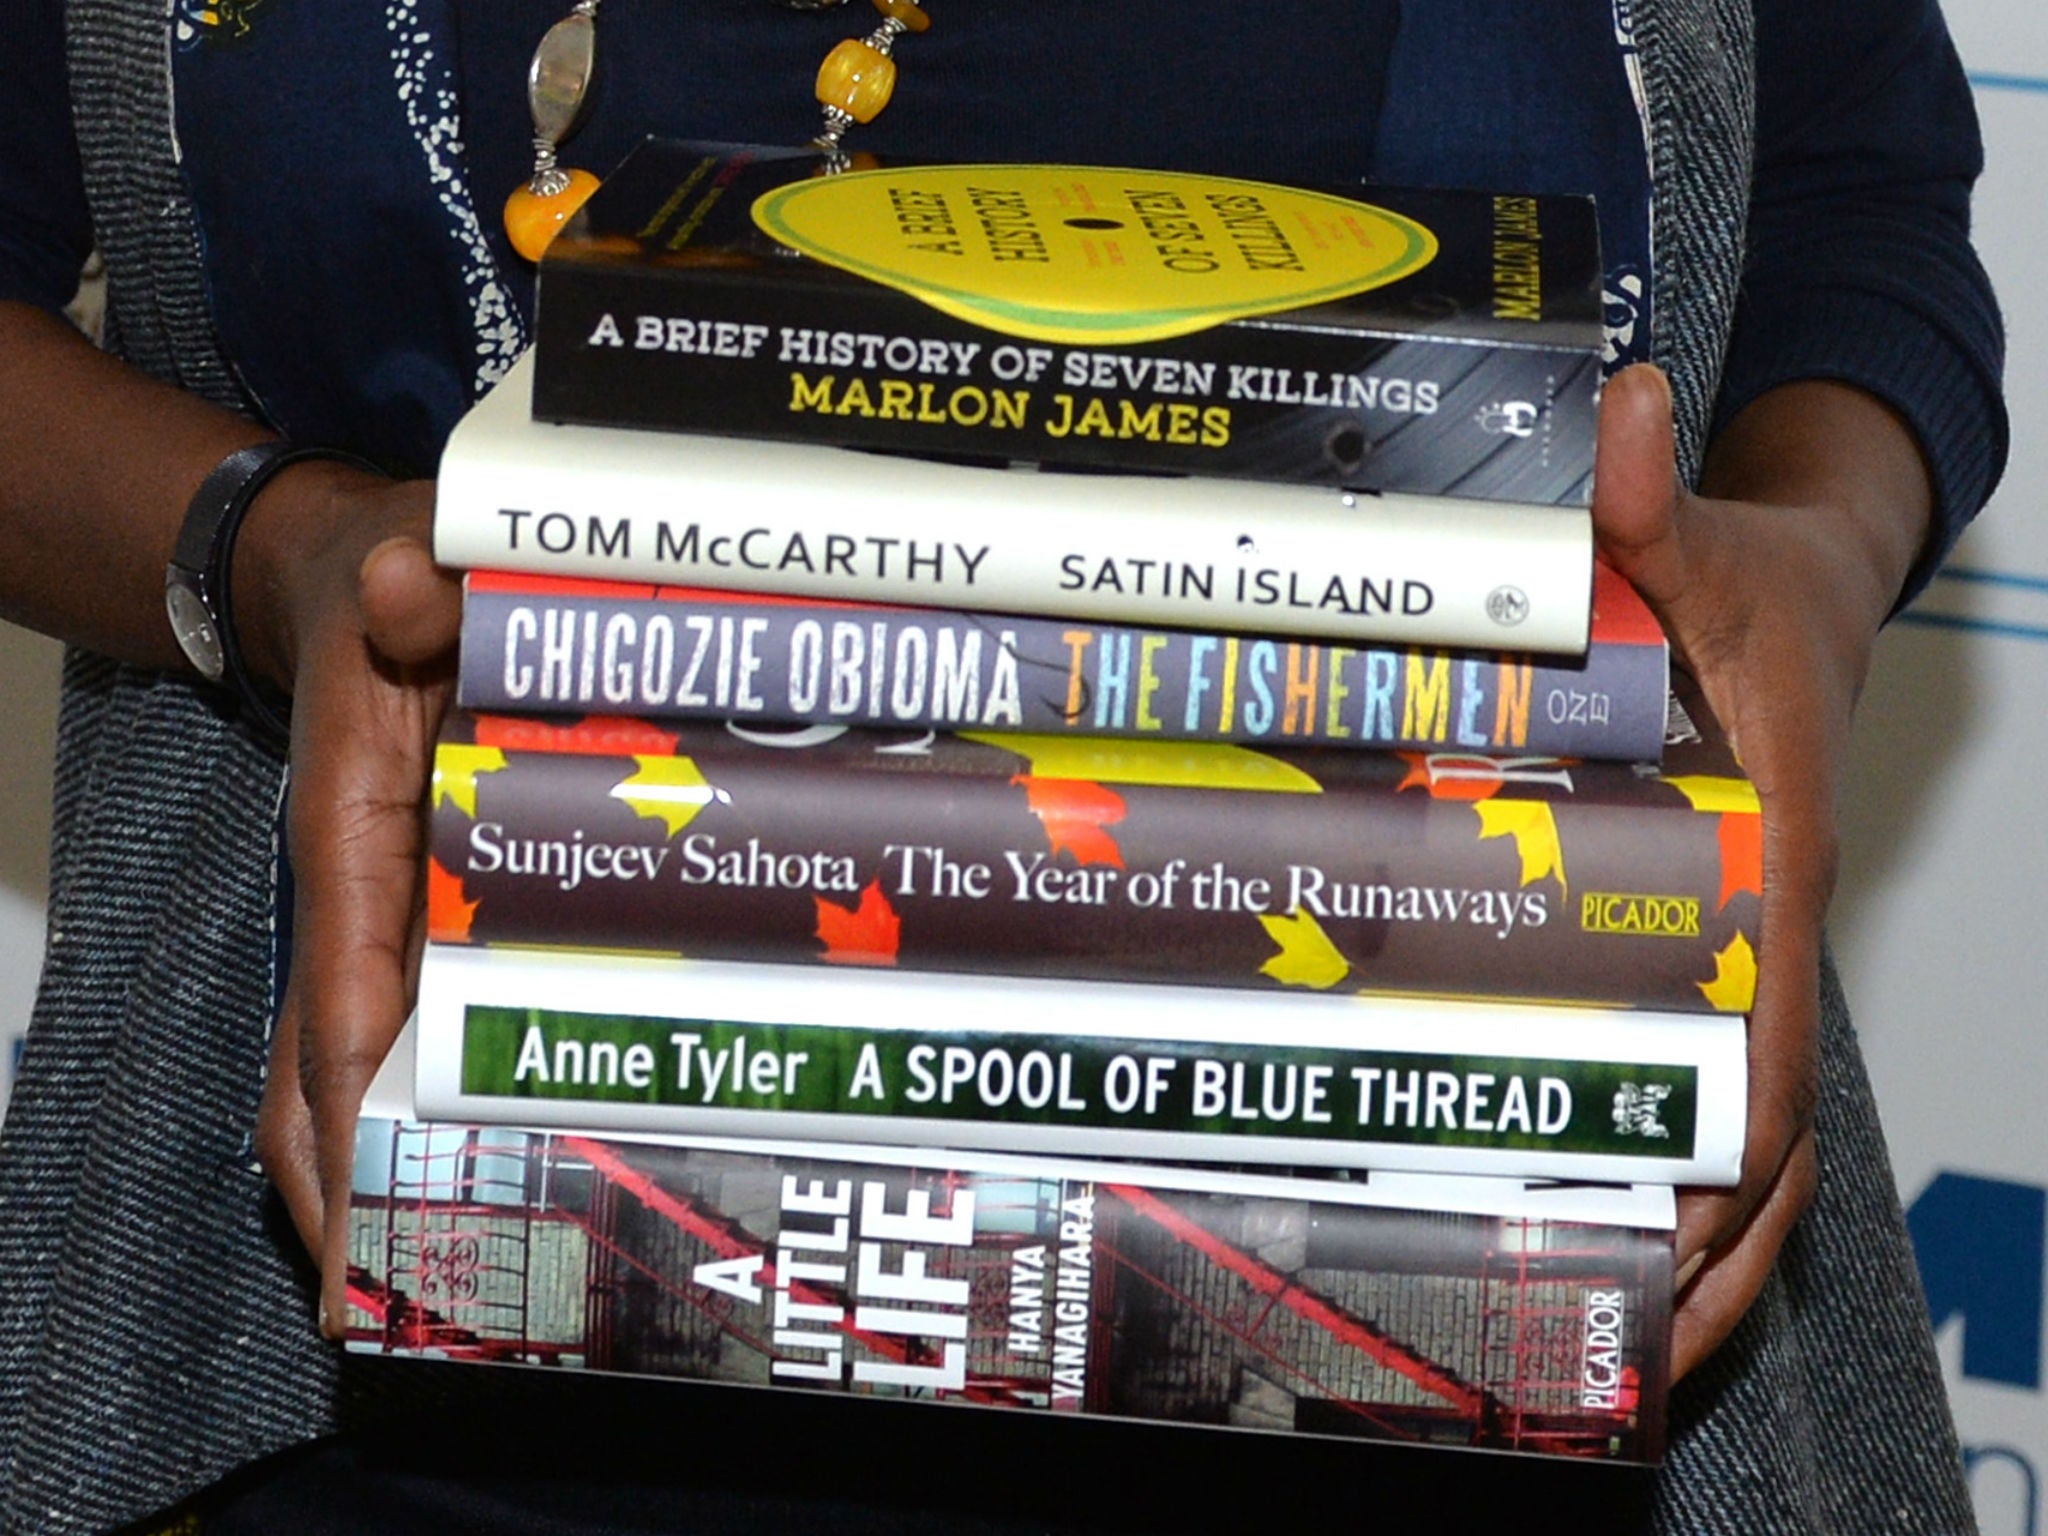 The Man Booker 2015 shortlisted novels